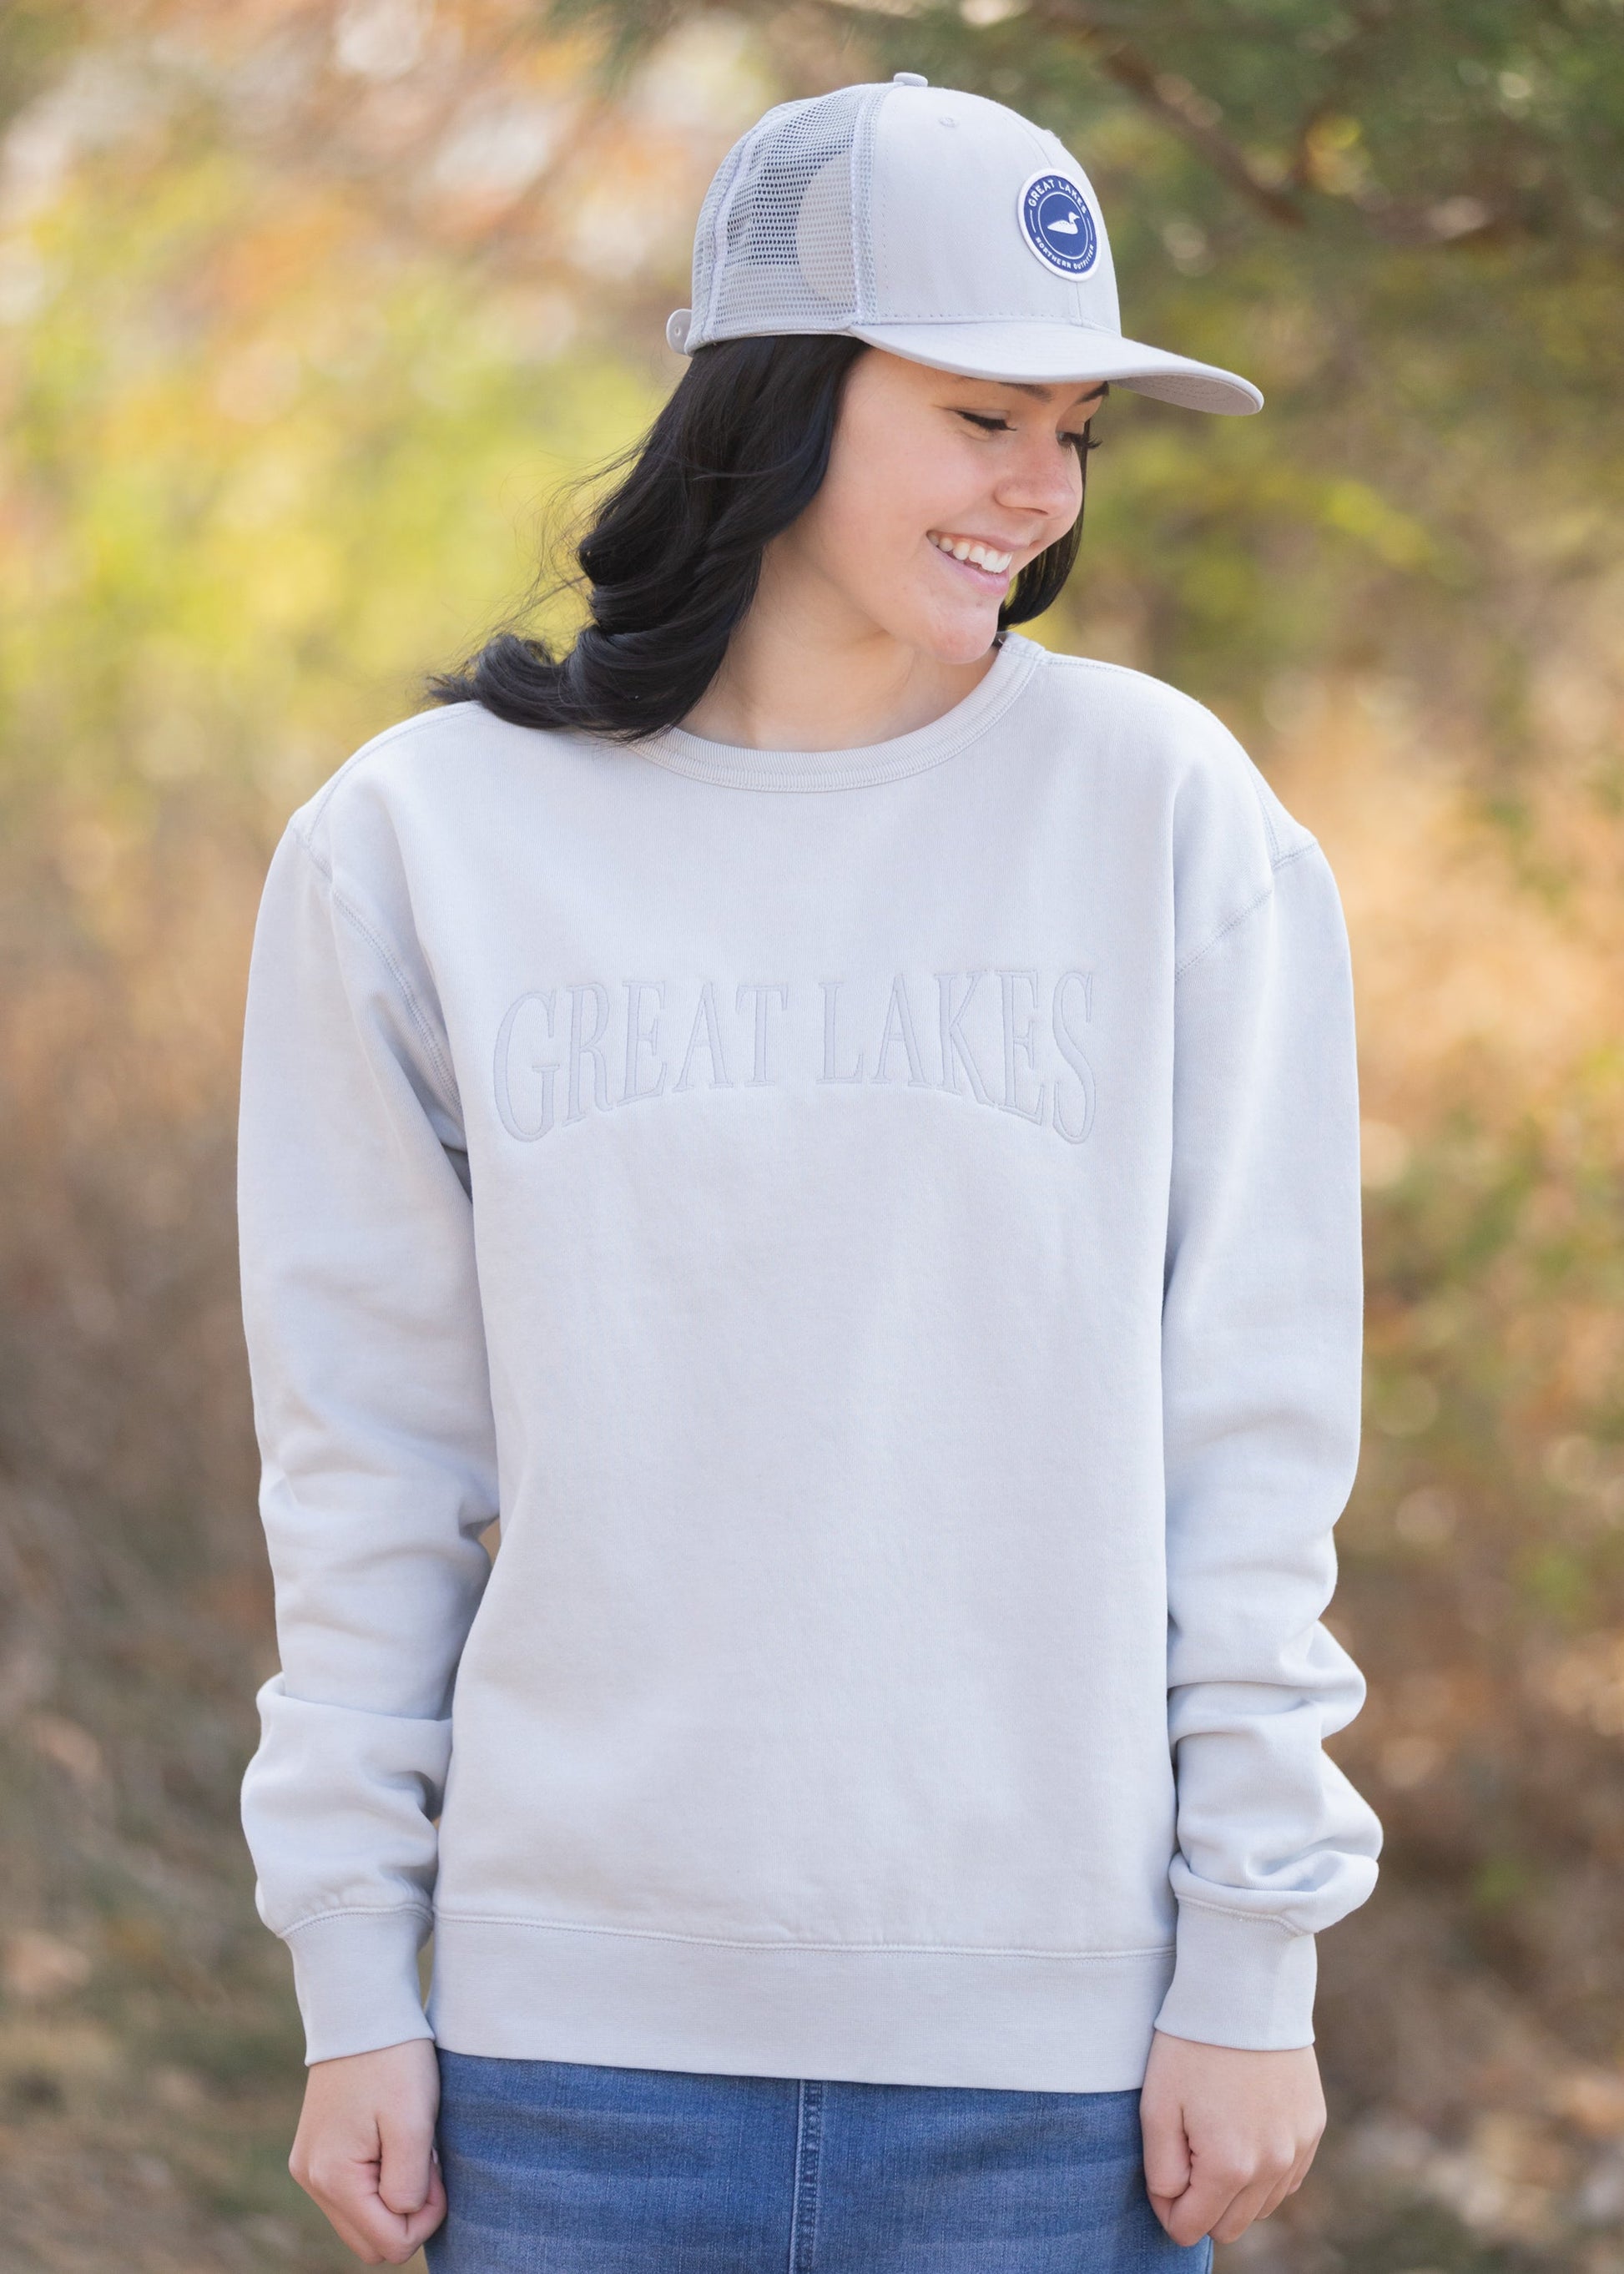 Great Lakes Embroidered Crewneck Sweatshirt Tops Gray / S